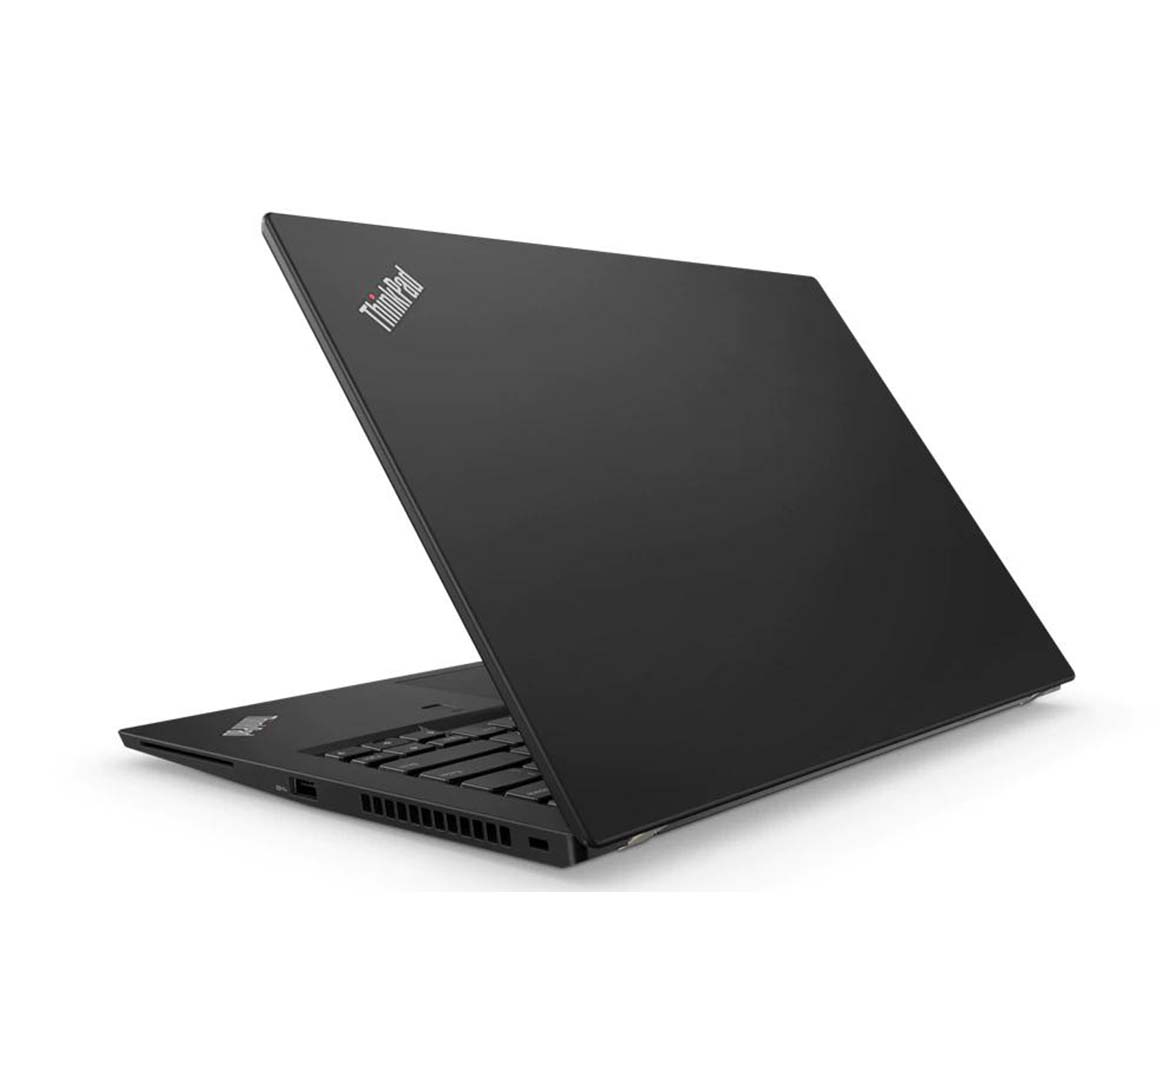 Lenovo ThinkPad T480s Business Laptop, Intel Core i5-8th Generation CPU, 8GB RAM, 256GB SSD, 14 inch Display, Windows 10 Pro